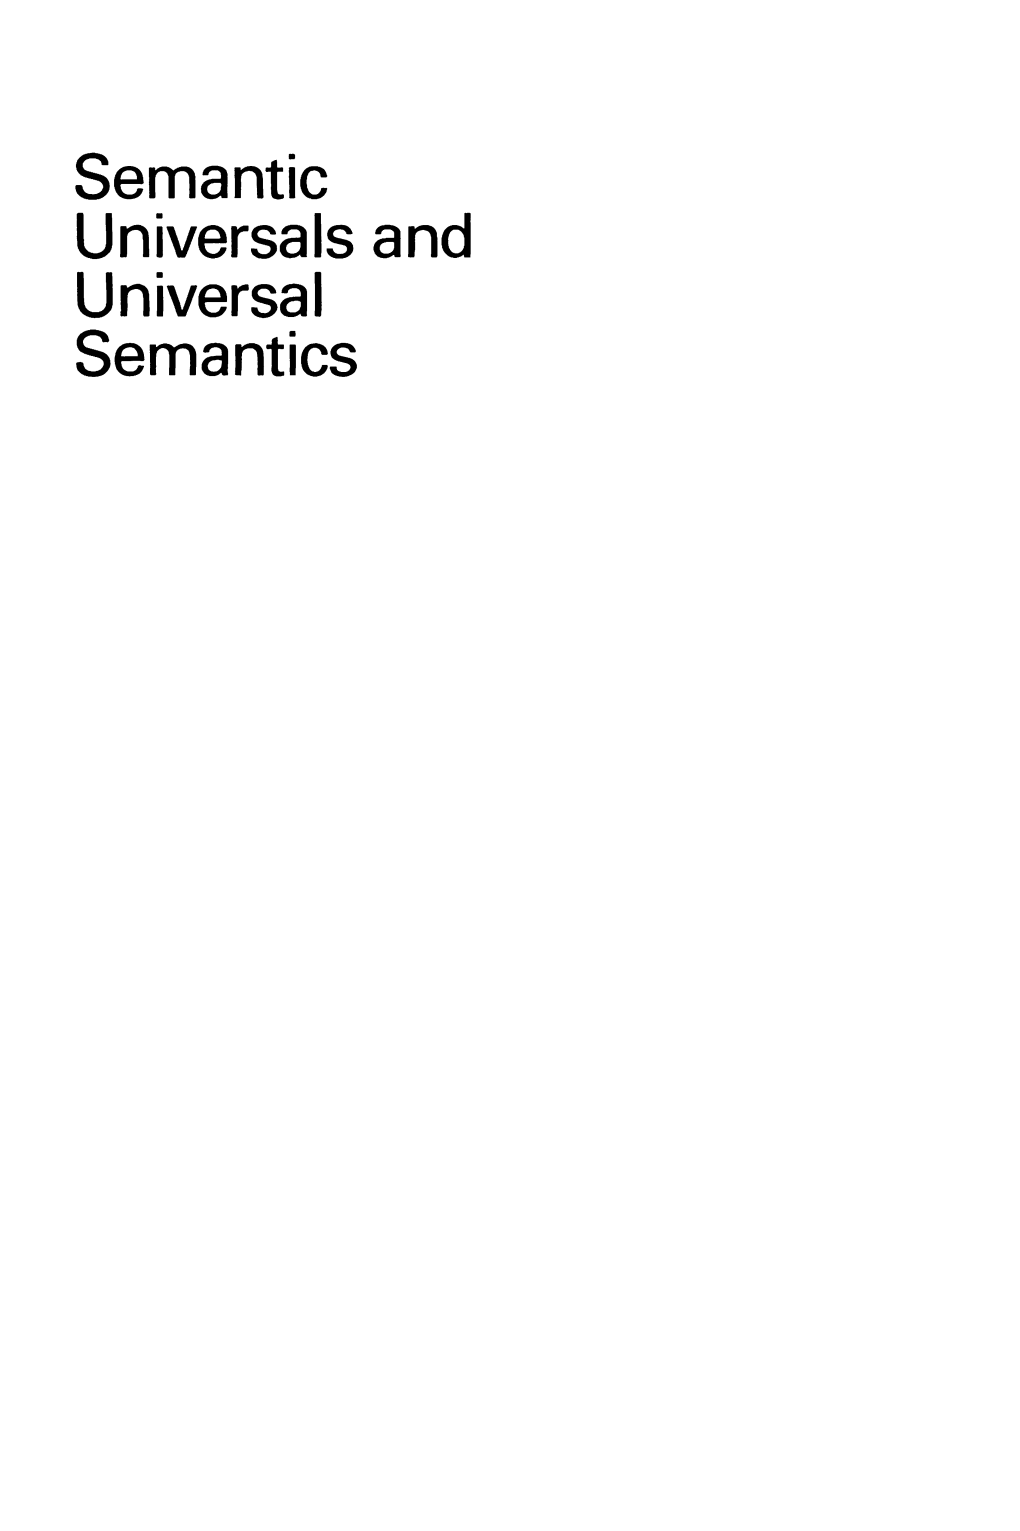 Introduction. Universals and Semantics